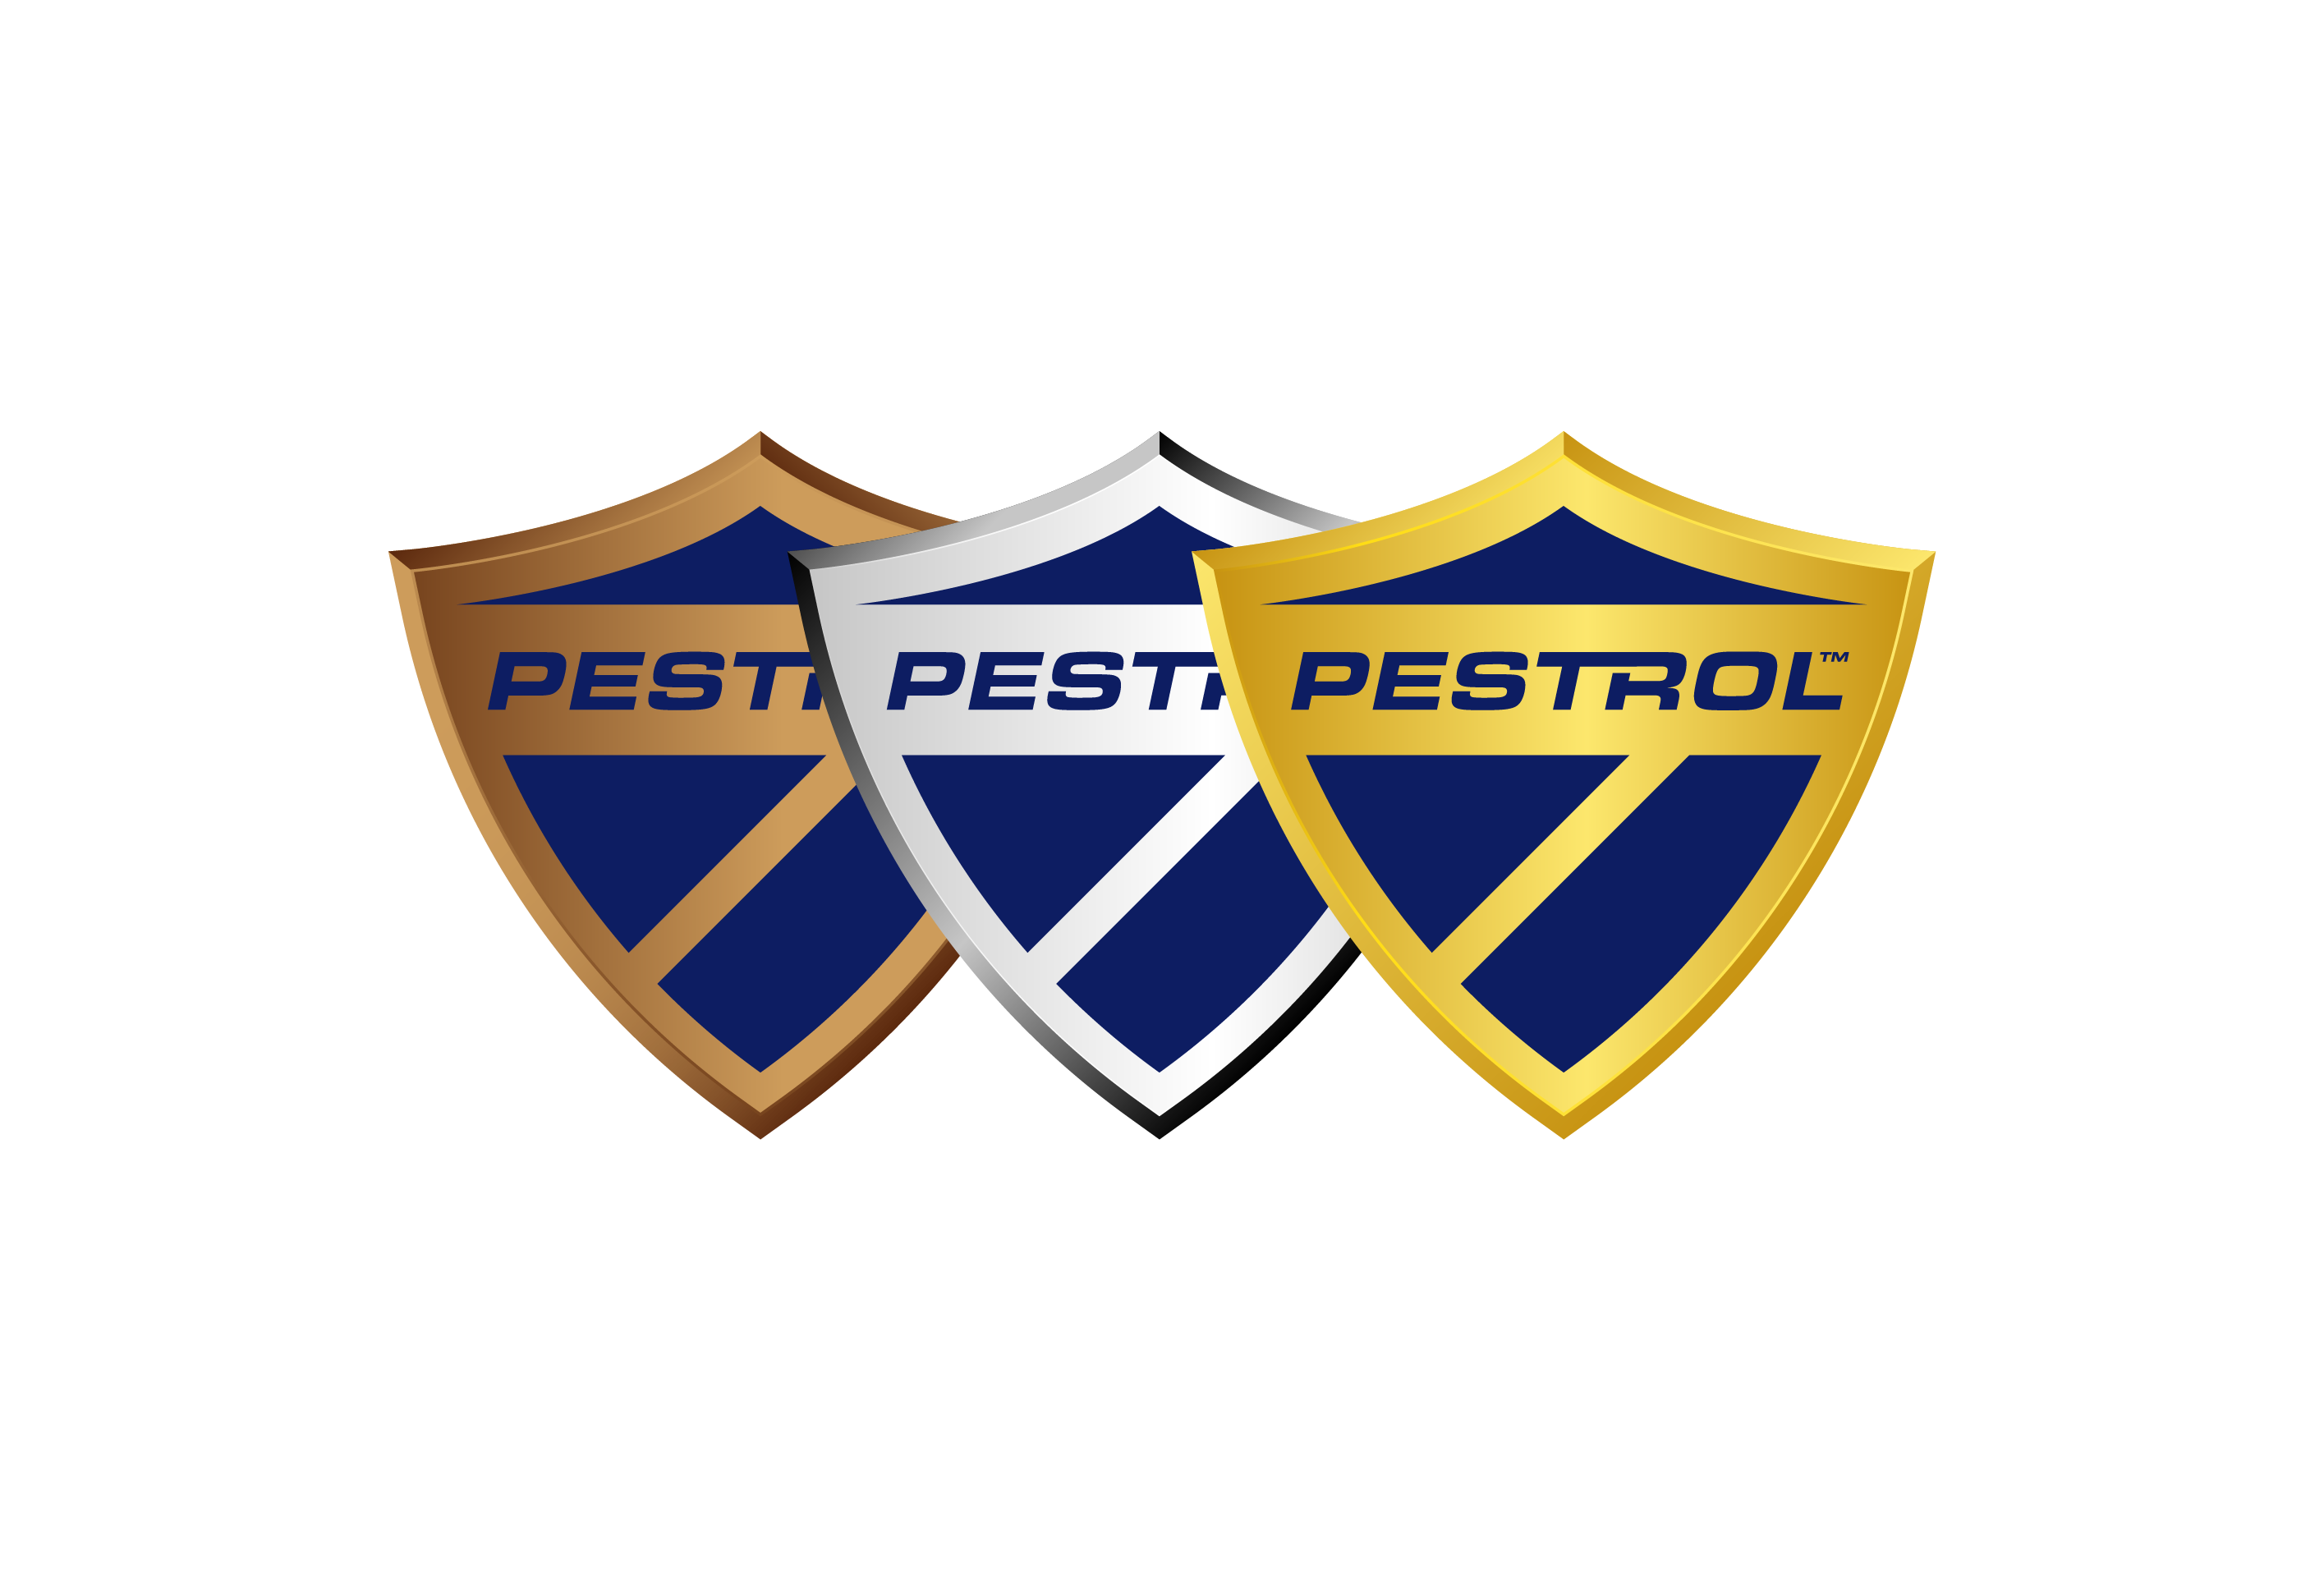 //www.pestrol.com/blog/wp-content/uploads/2018/04/Website-Pestrol-Shields.png